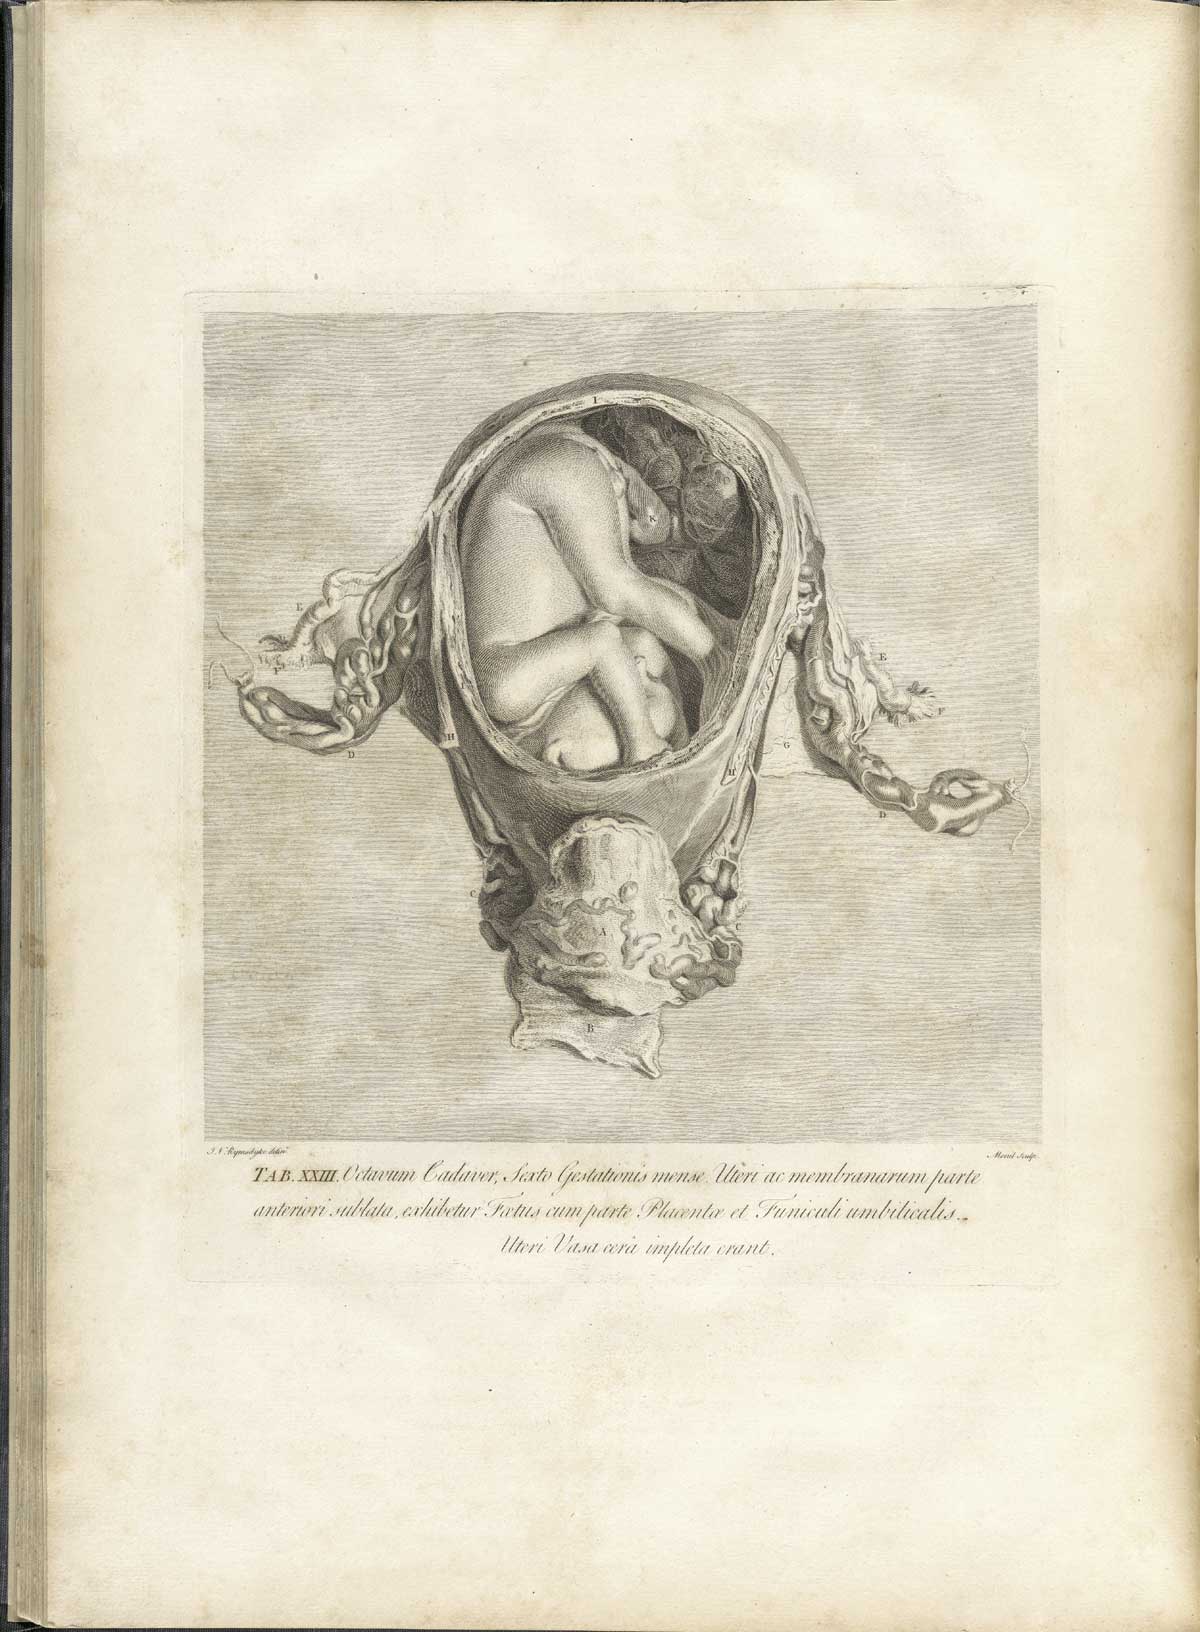 Table 23 of William Hunter's Anatomia uteri humani gravidi tabulis illustrata, featuring the cross section of a detached uterus with a fetus inside.